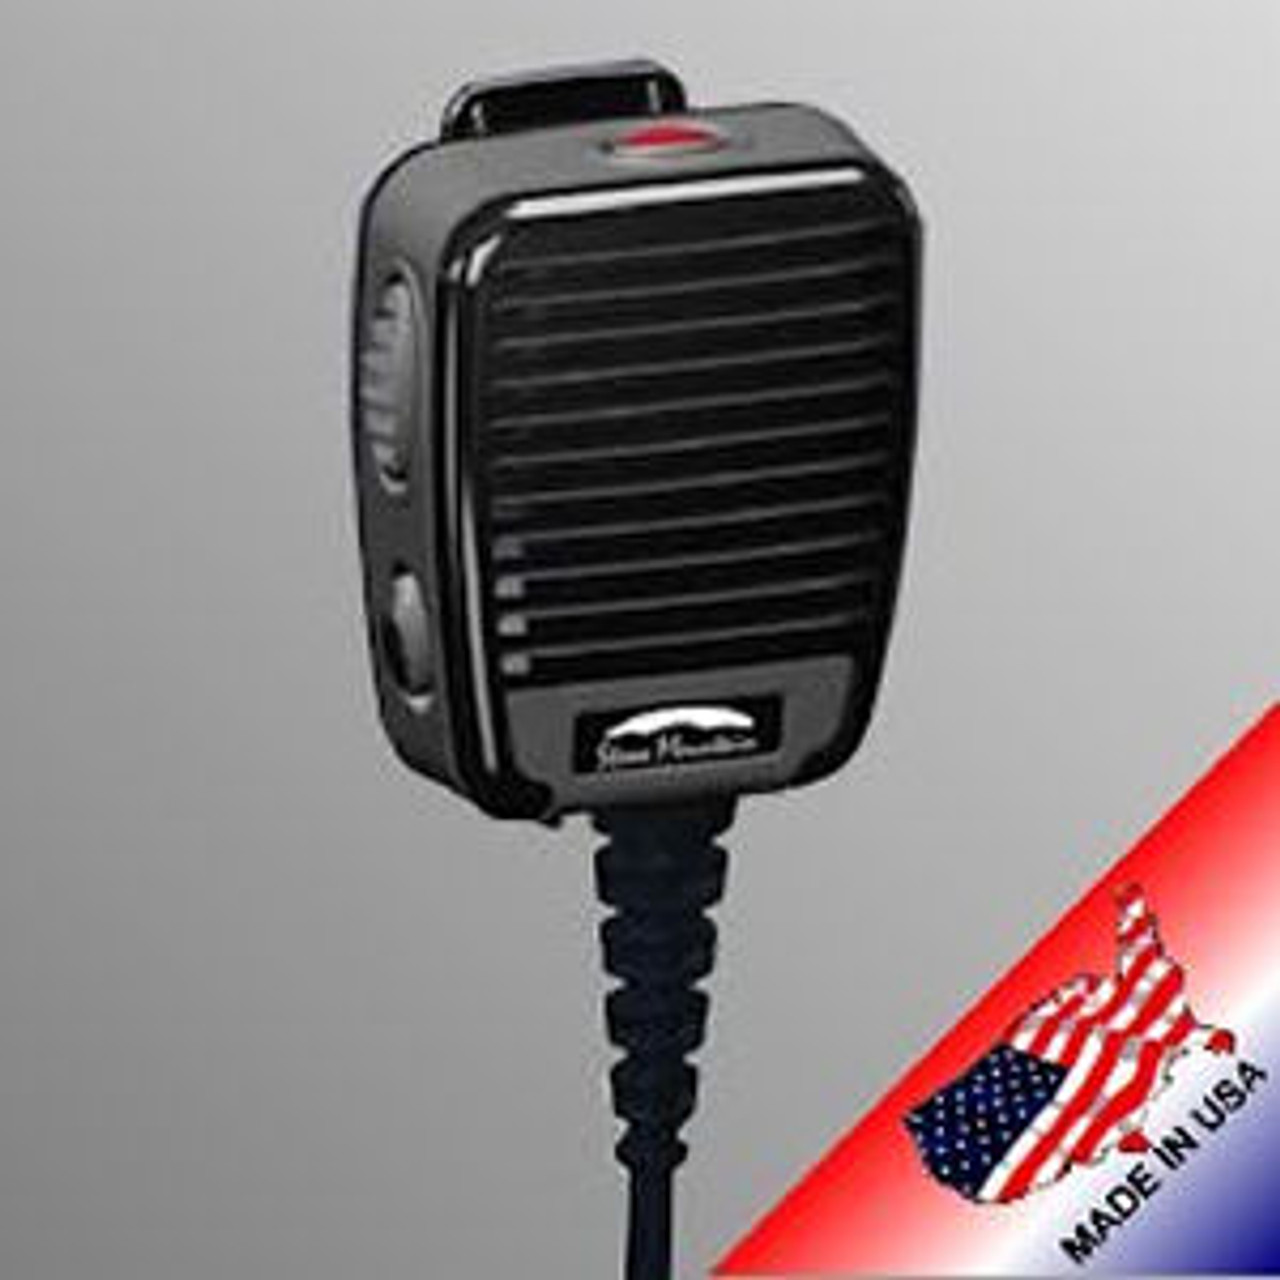 Bendix King DPHX Noise Canceling Ruggedized Waterproof IP68 High Volume Speaker Mic